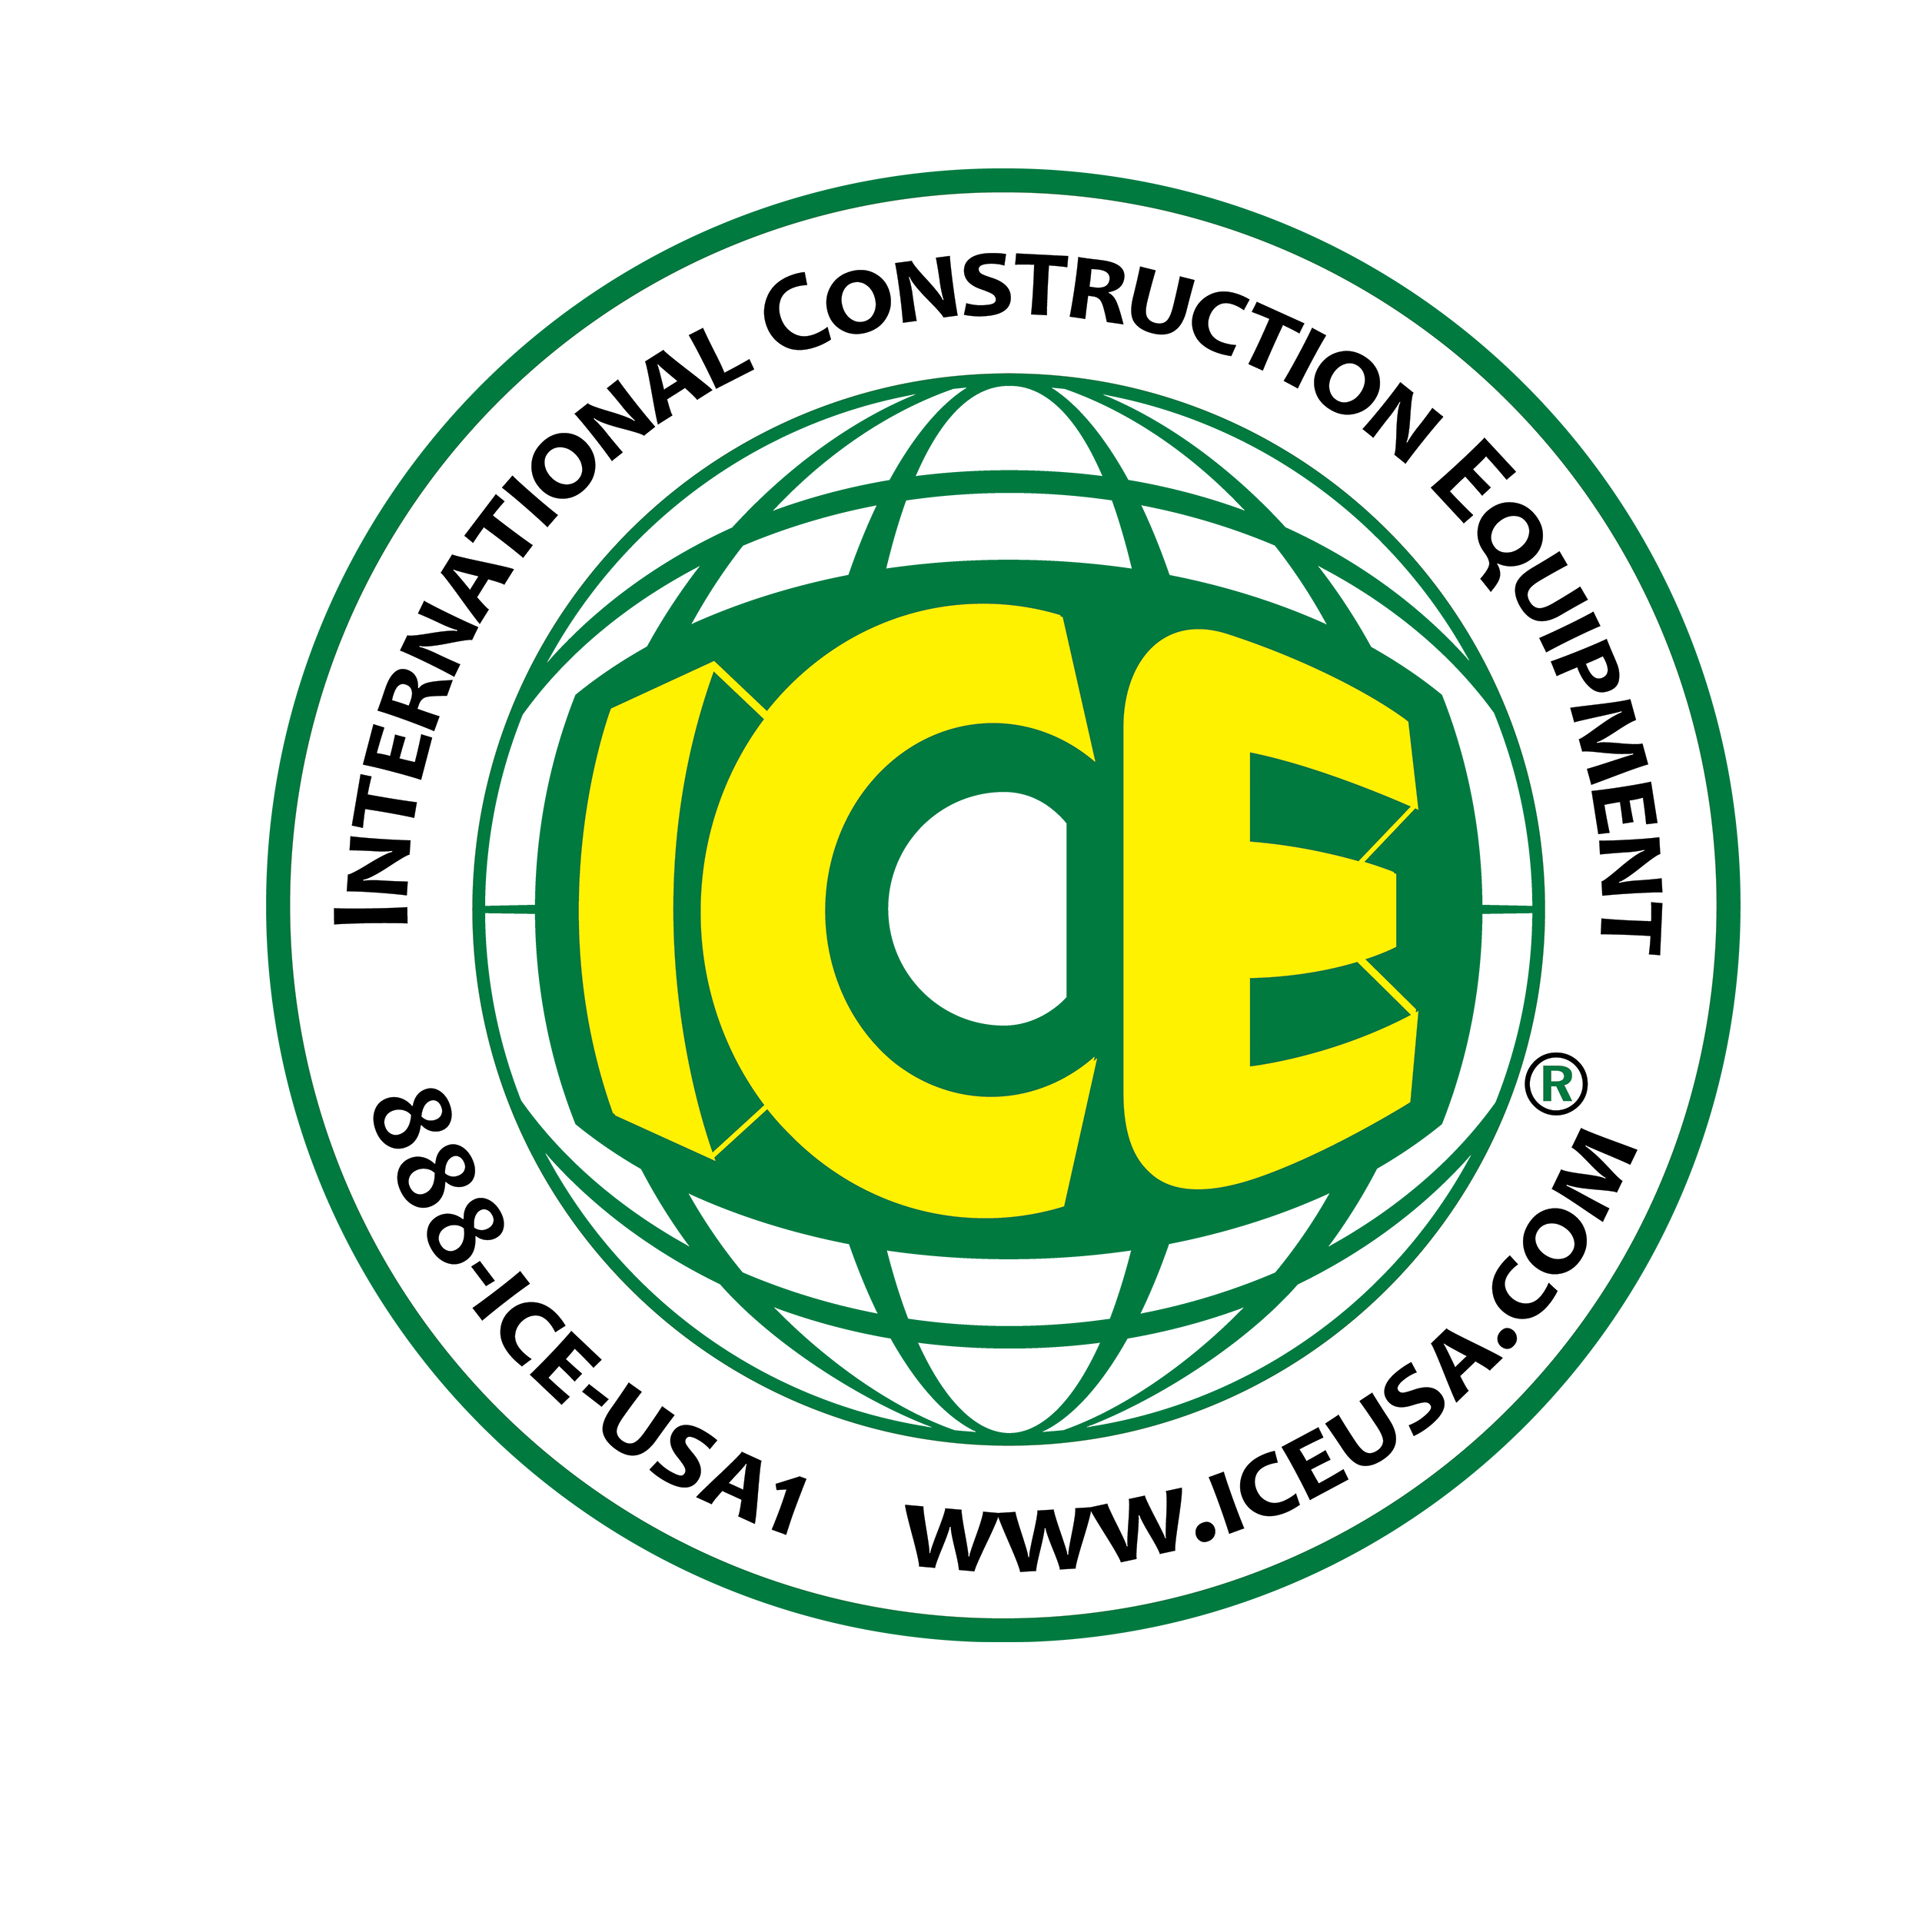  ICE® - International Construction Equipment, Inc